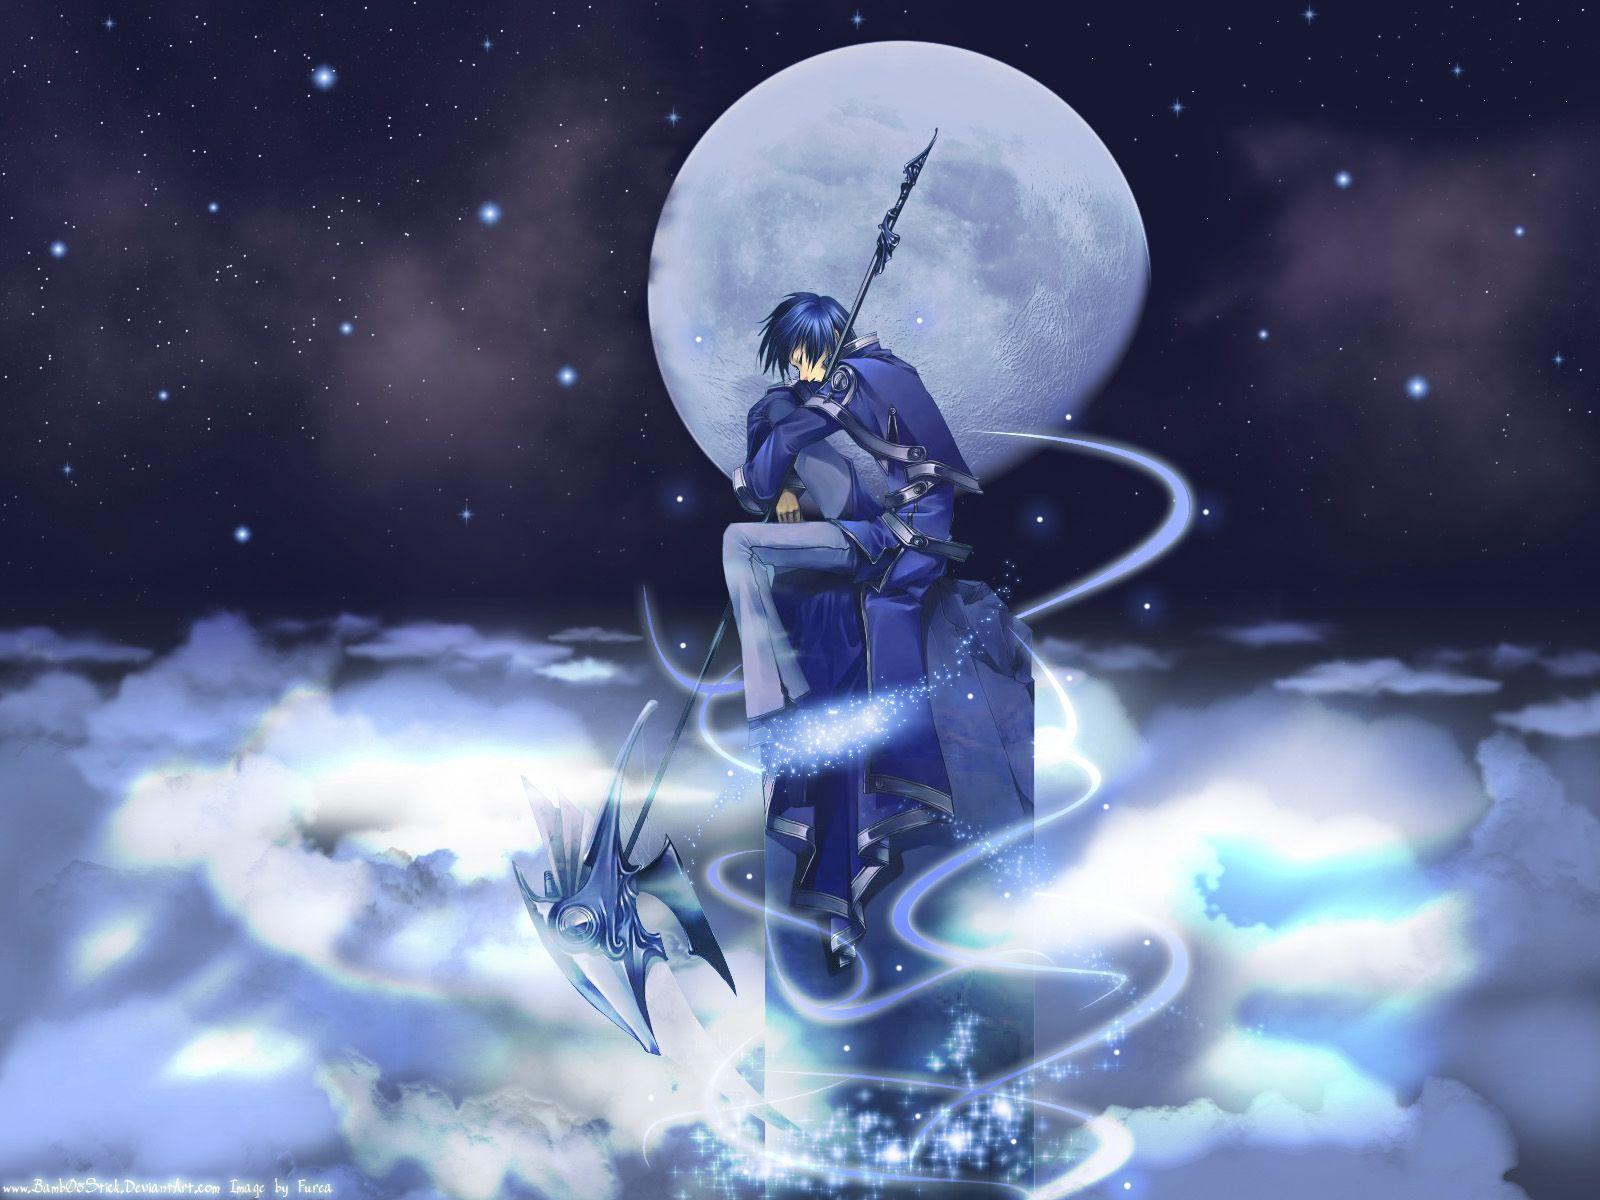 Anime Moon Images  Free Download on Freepik